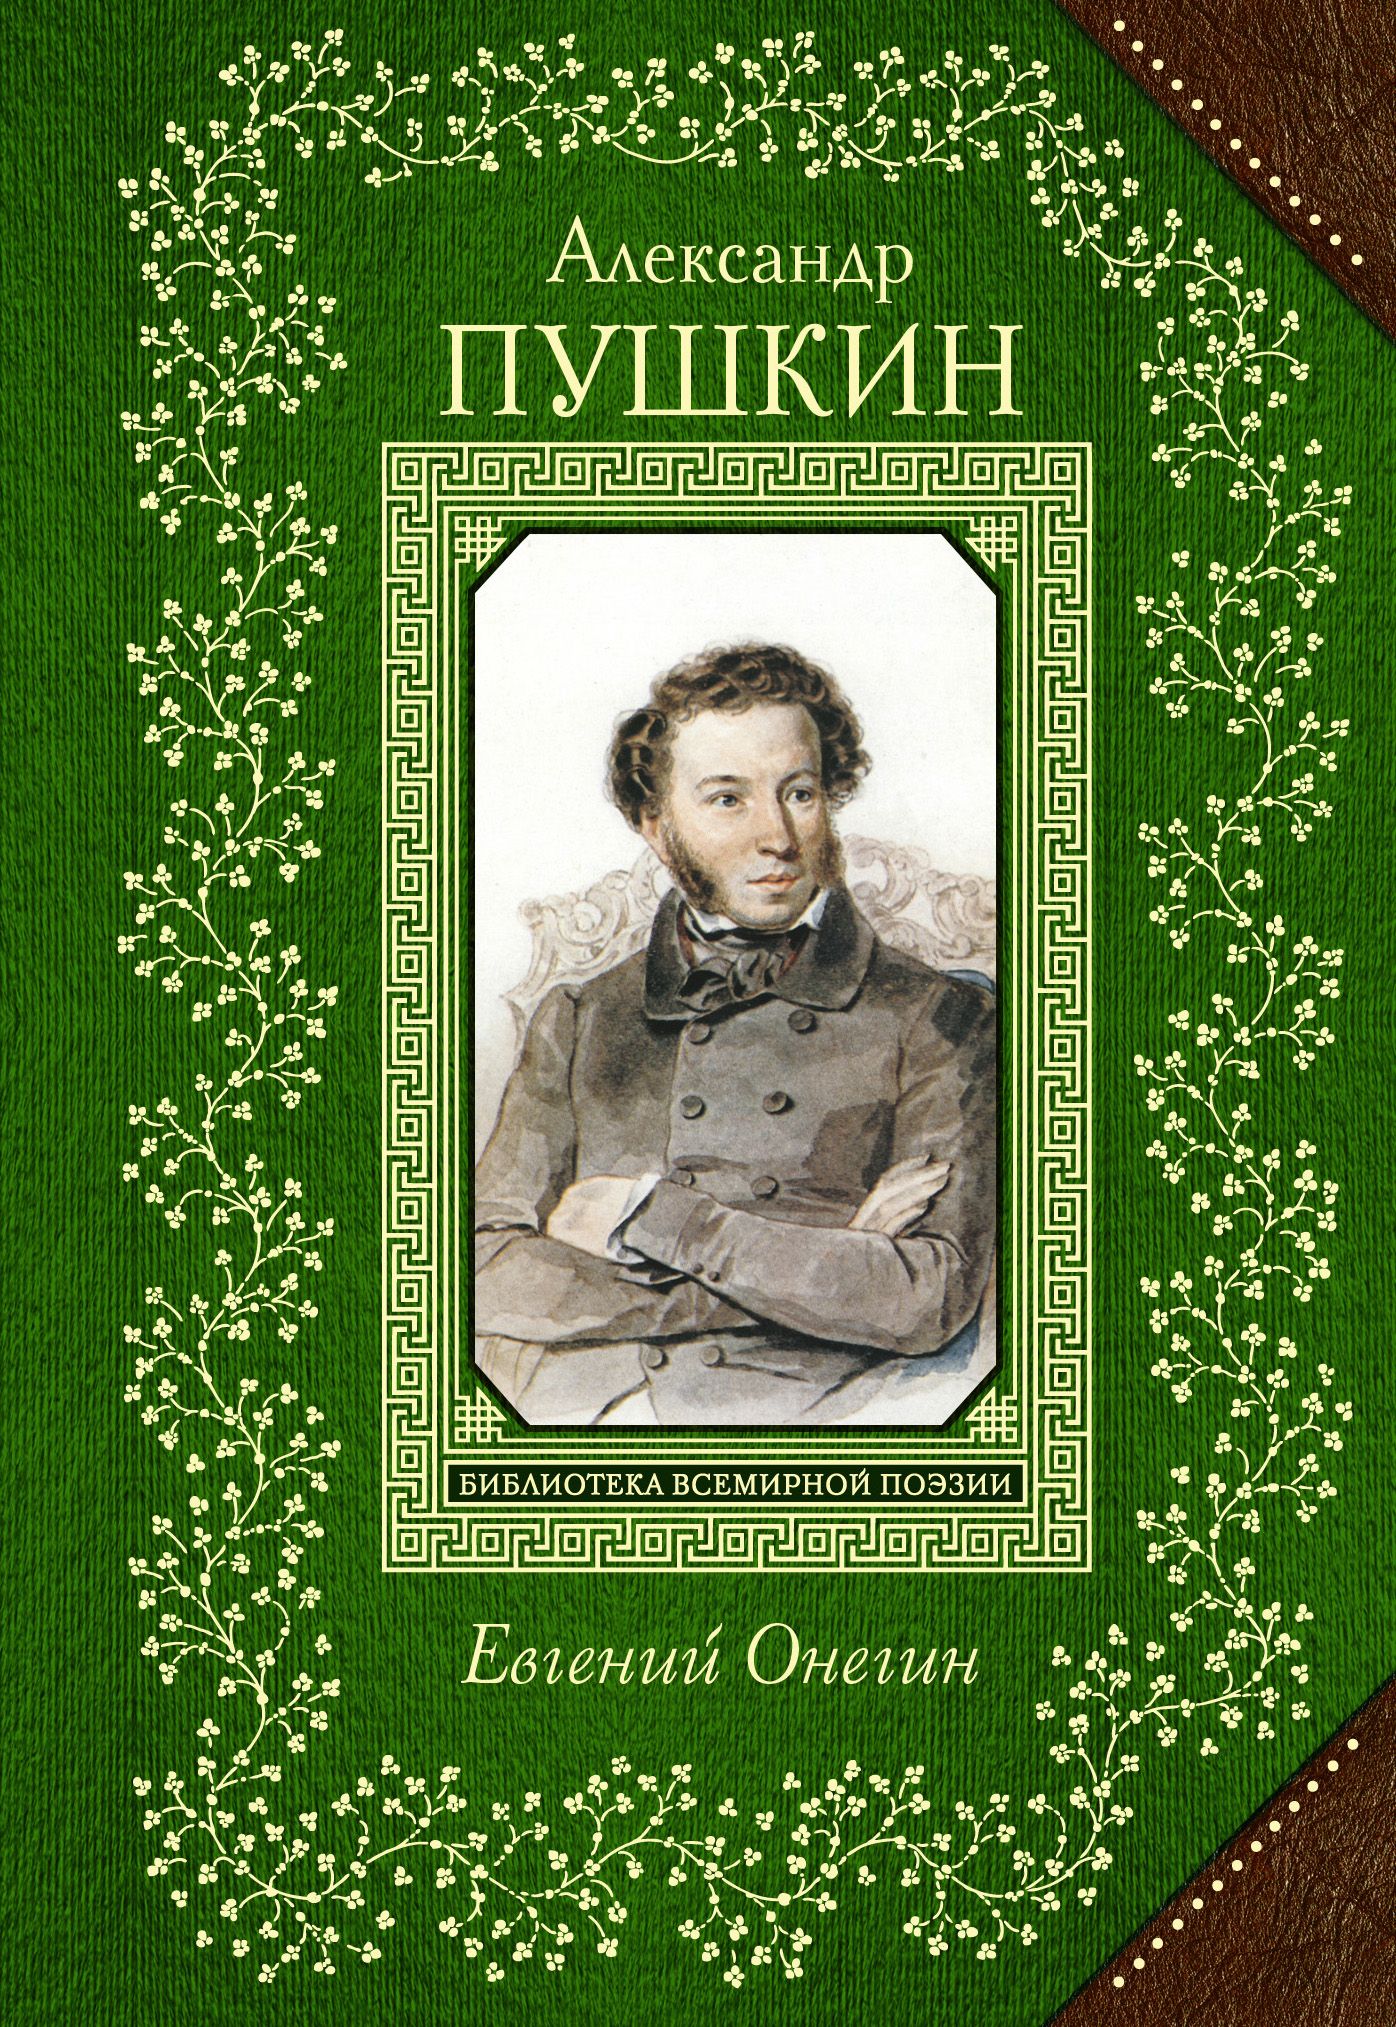 Какие есть книги пушкина. Обложки книг Пушкина.